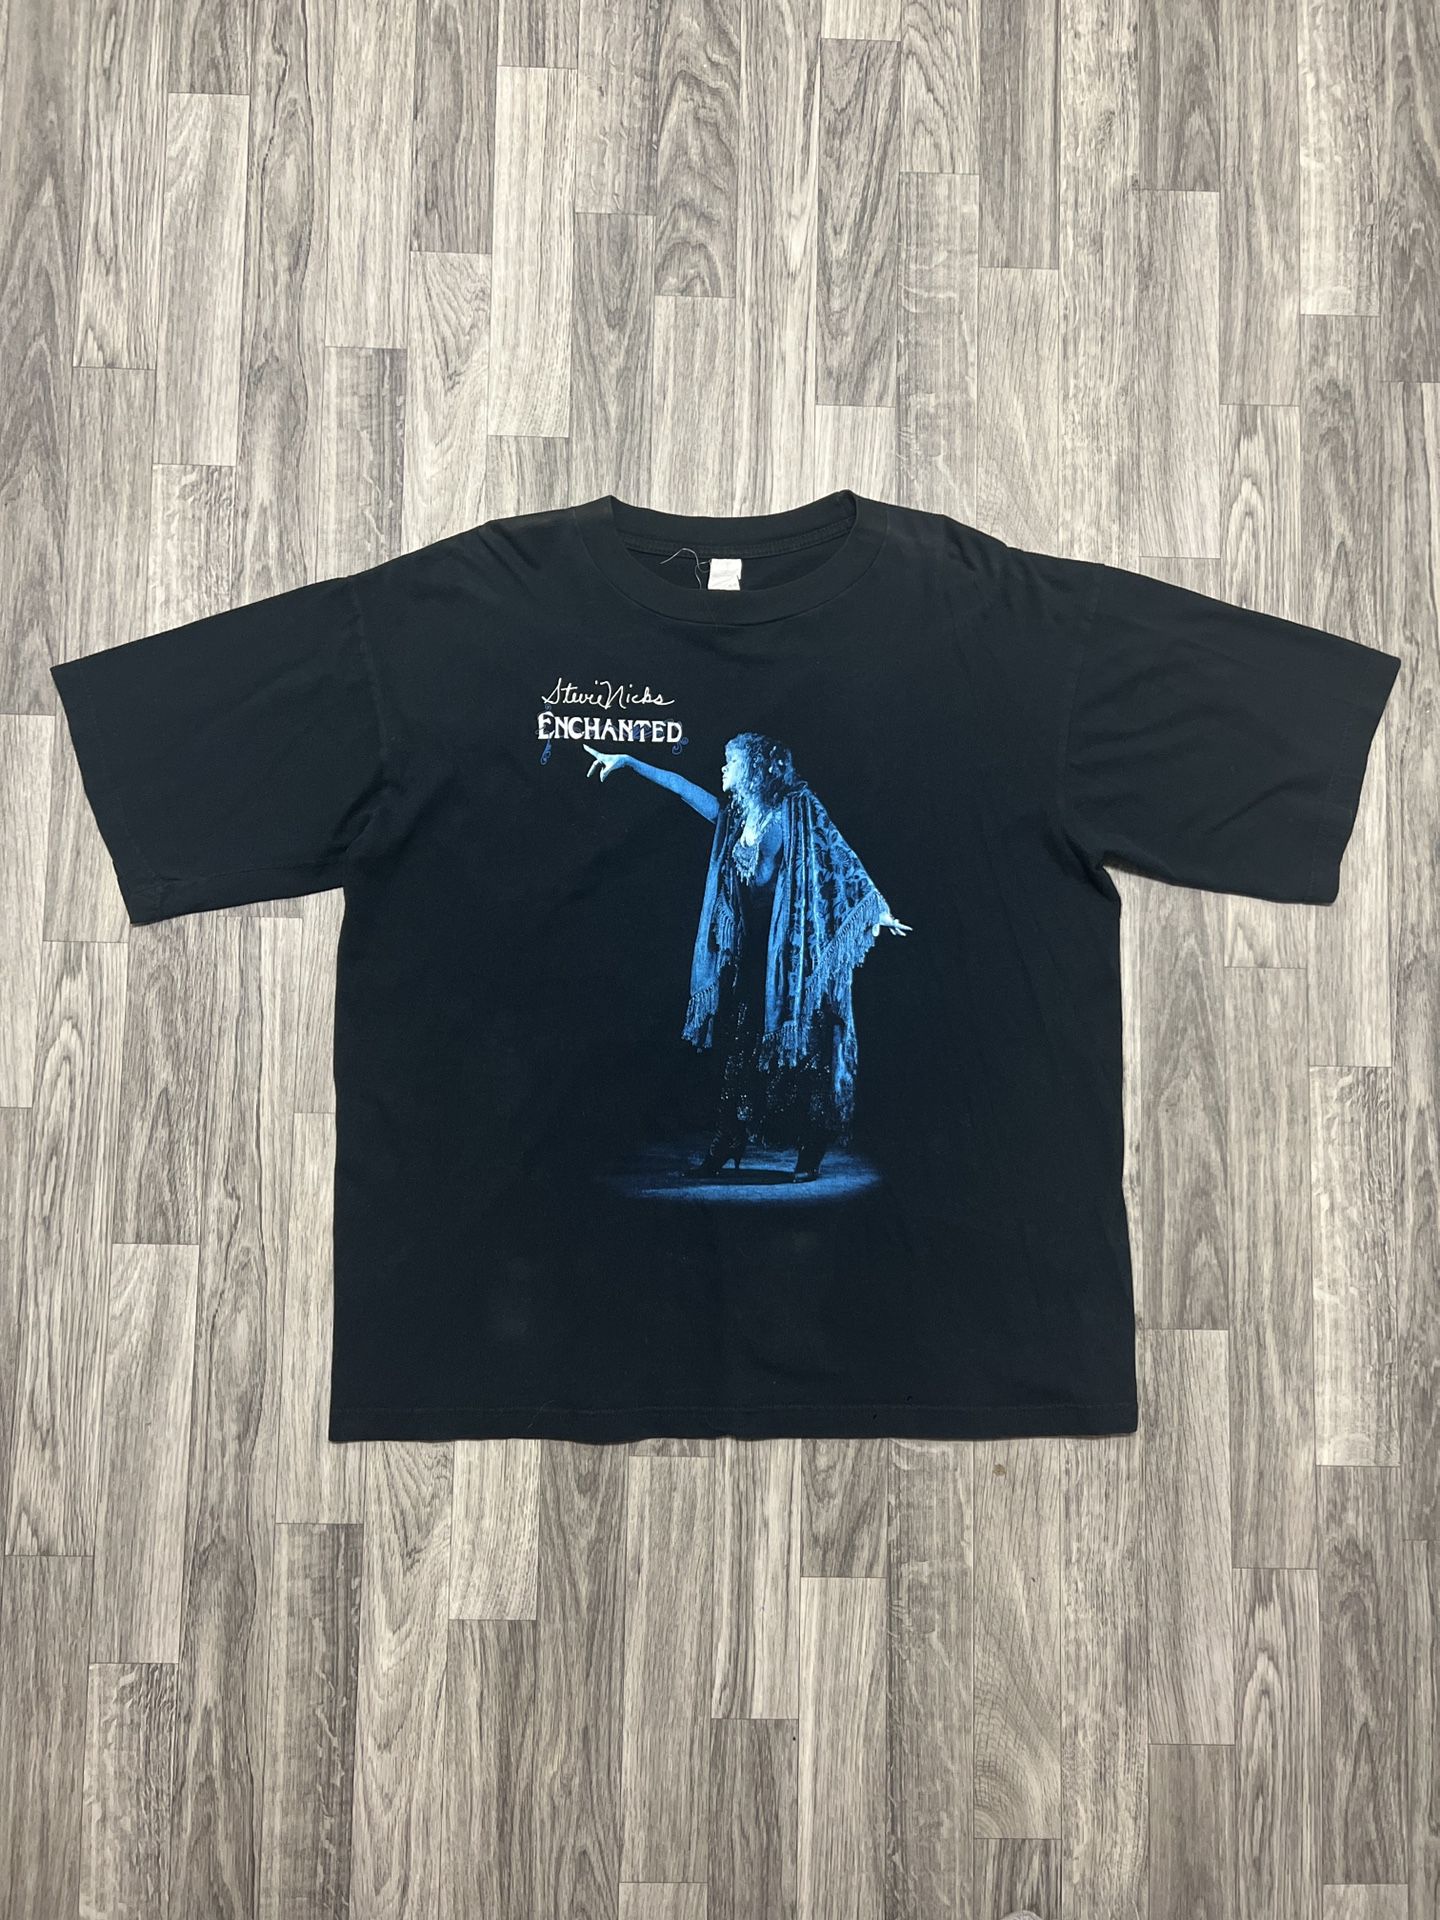 Vintage Stevie Nicks 1998 Enchanted Tour T Shirt XL Black Allsport Fleetwood Mac